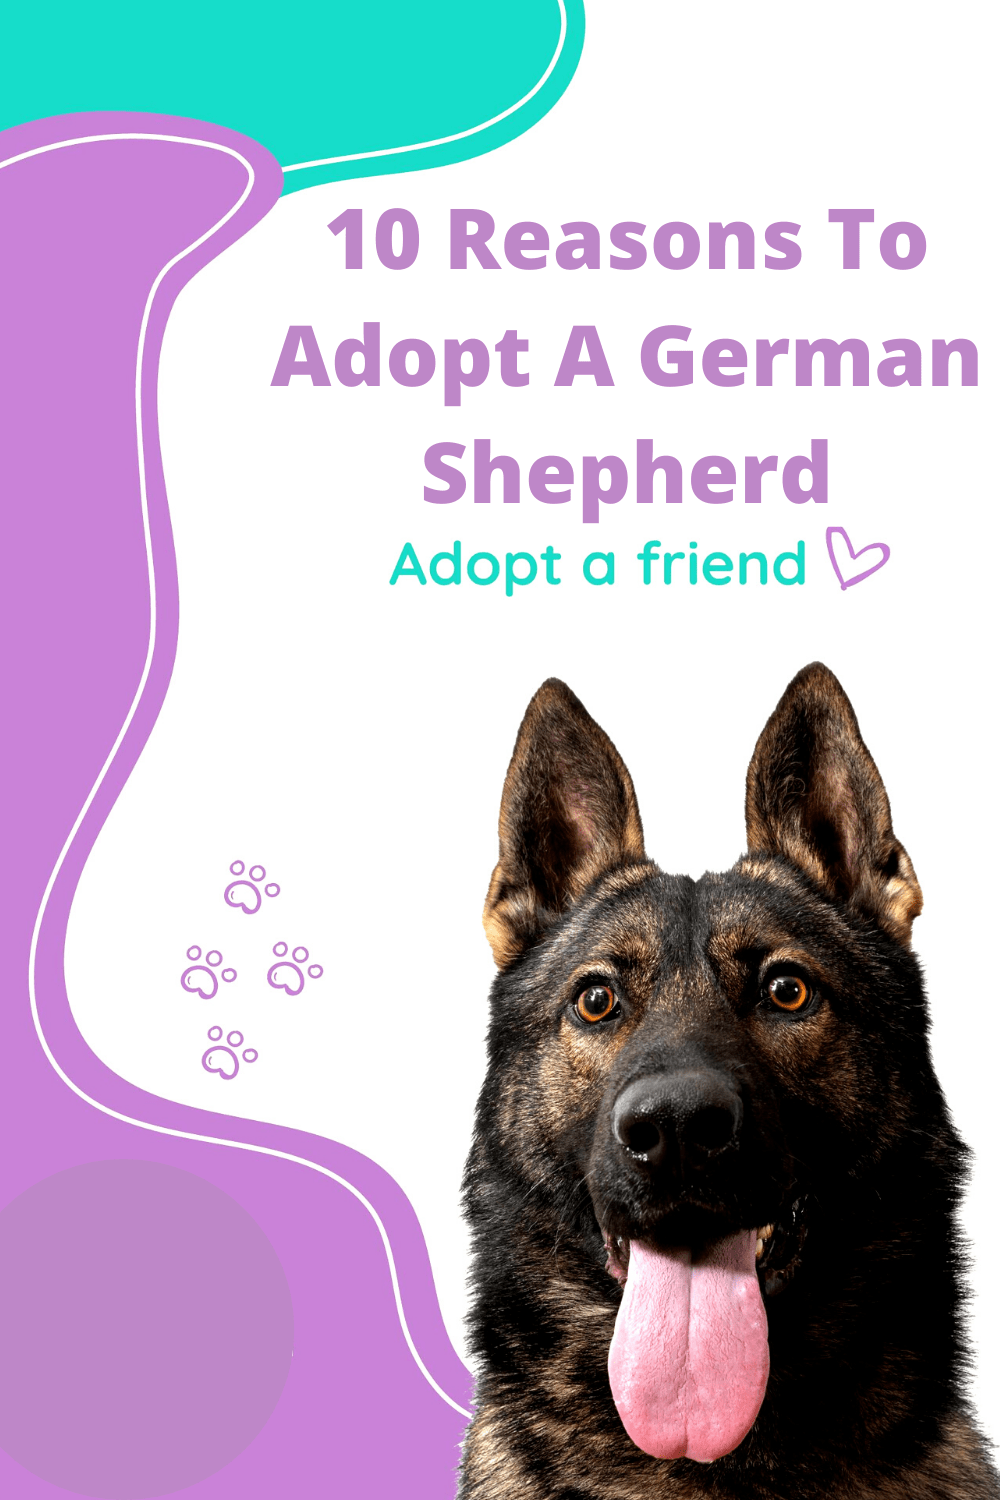 10 Reasons to Adpot a German Shepherd